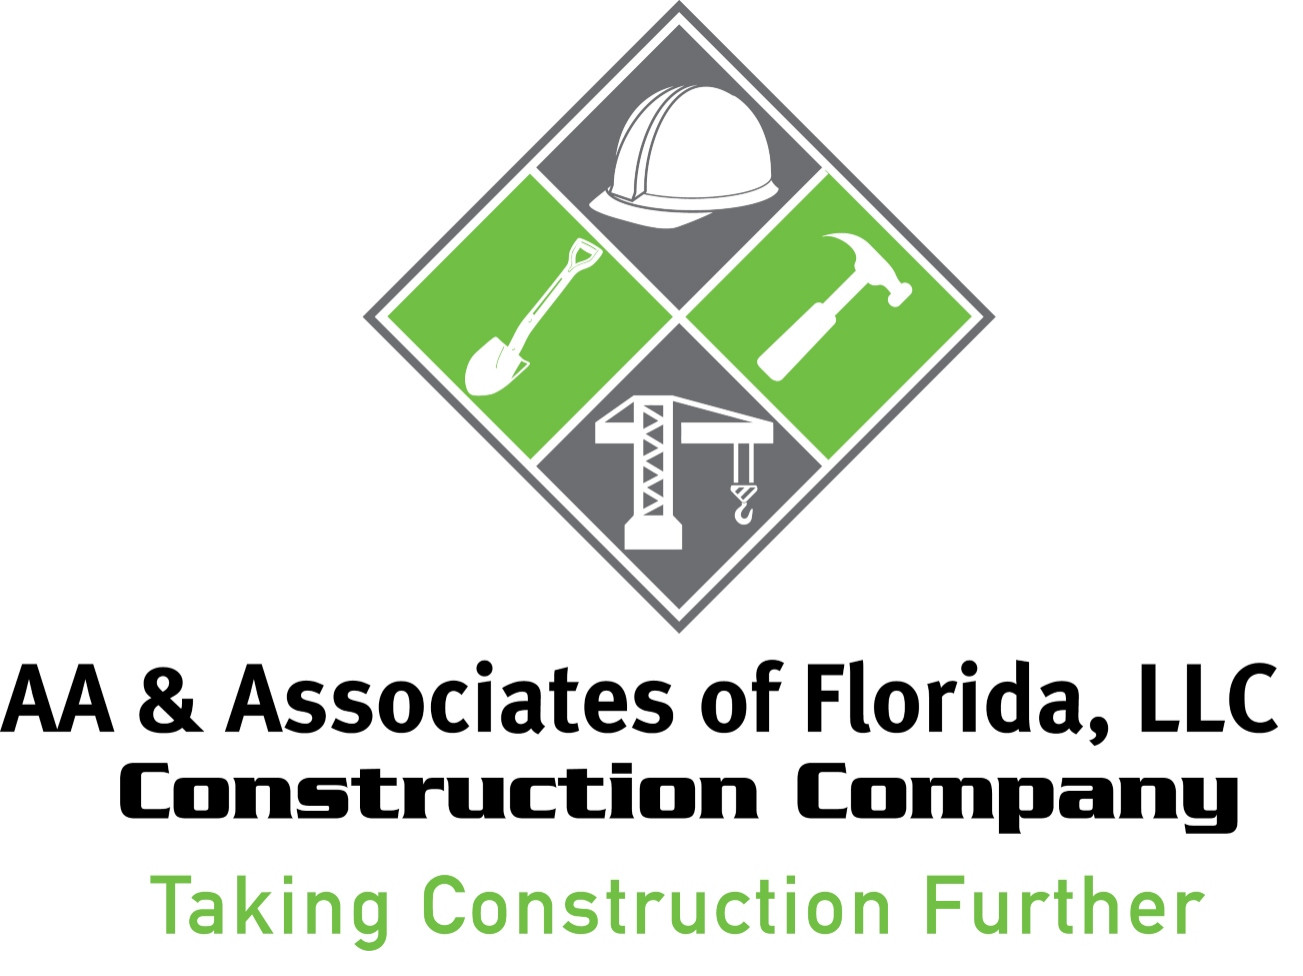 AA & Associates of Florida, LLC